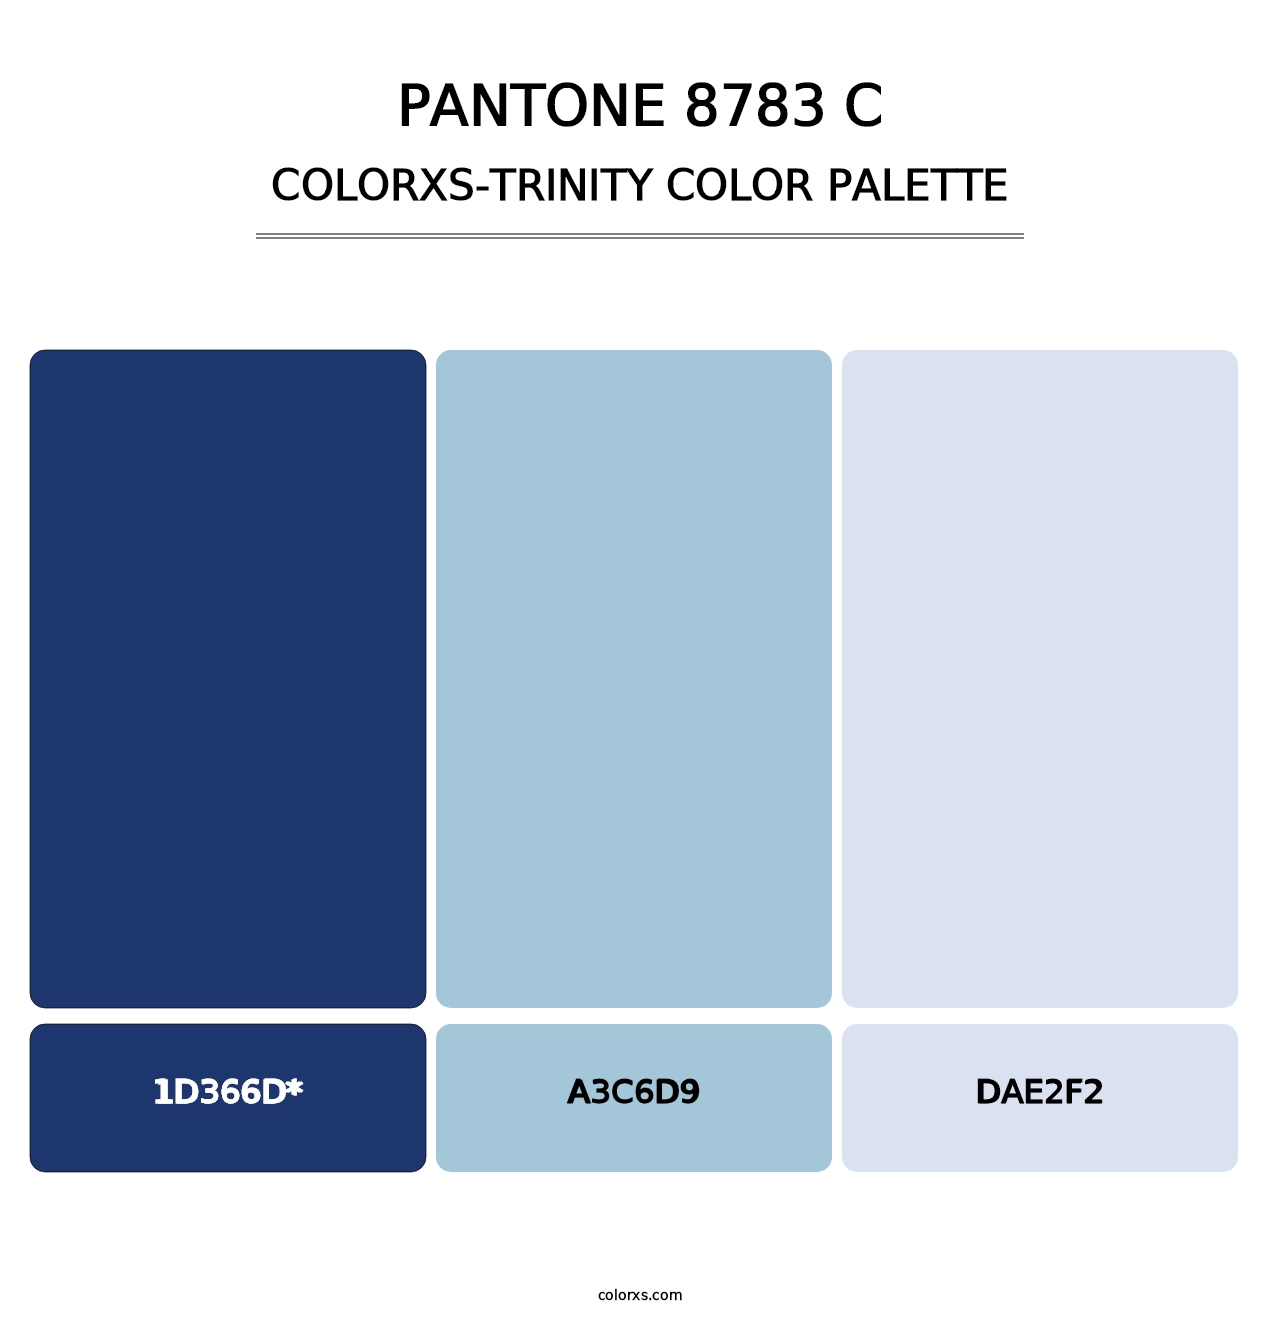 PANTONE 8783 C - Colorxs Trinity Palette